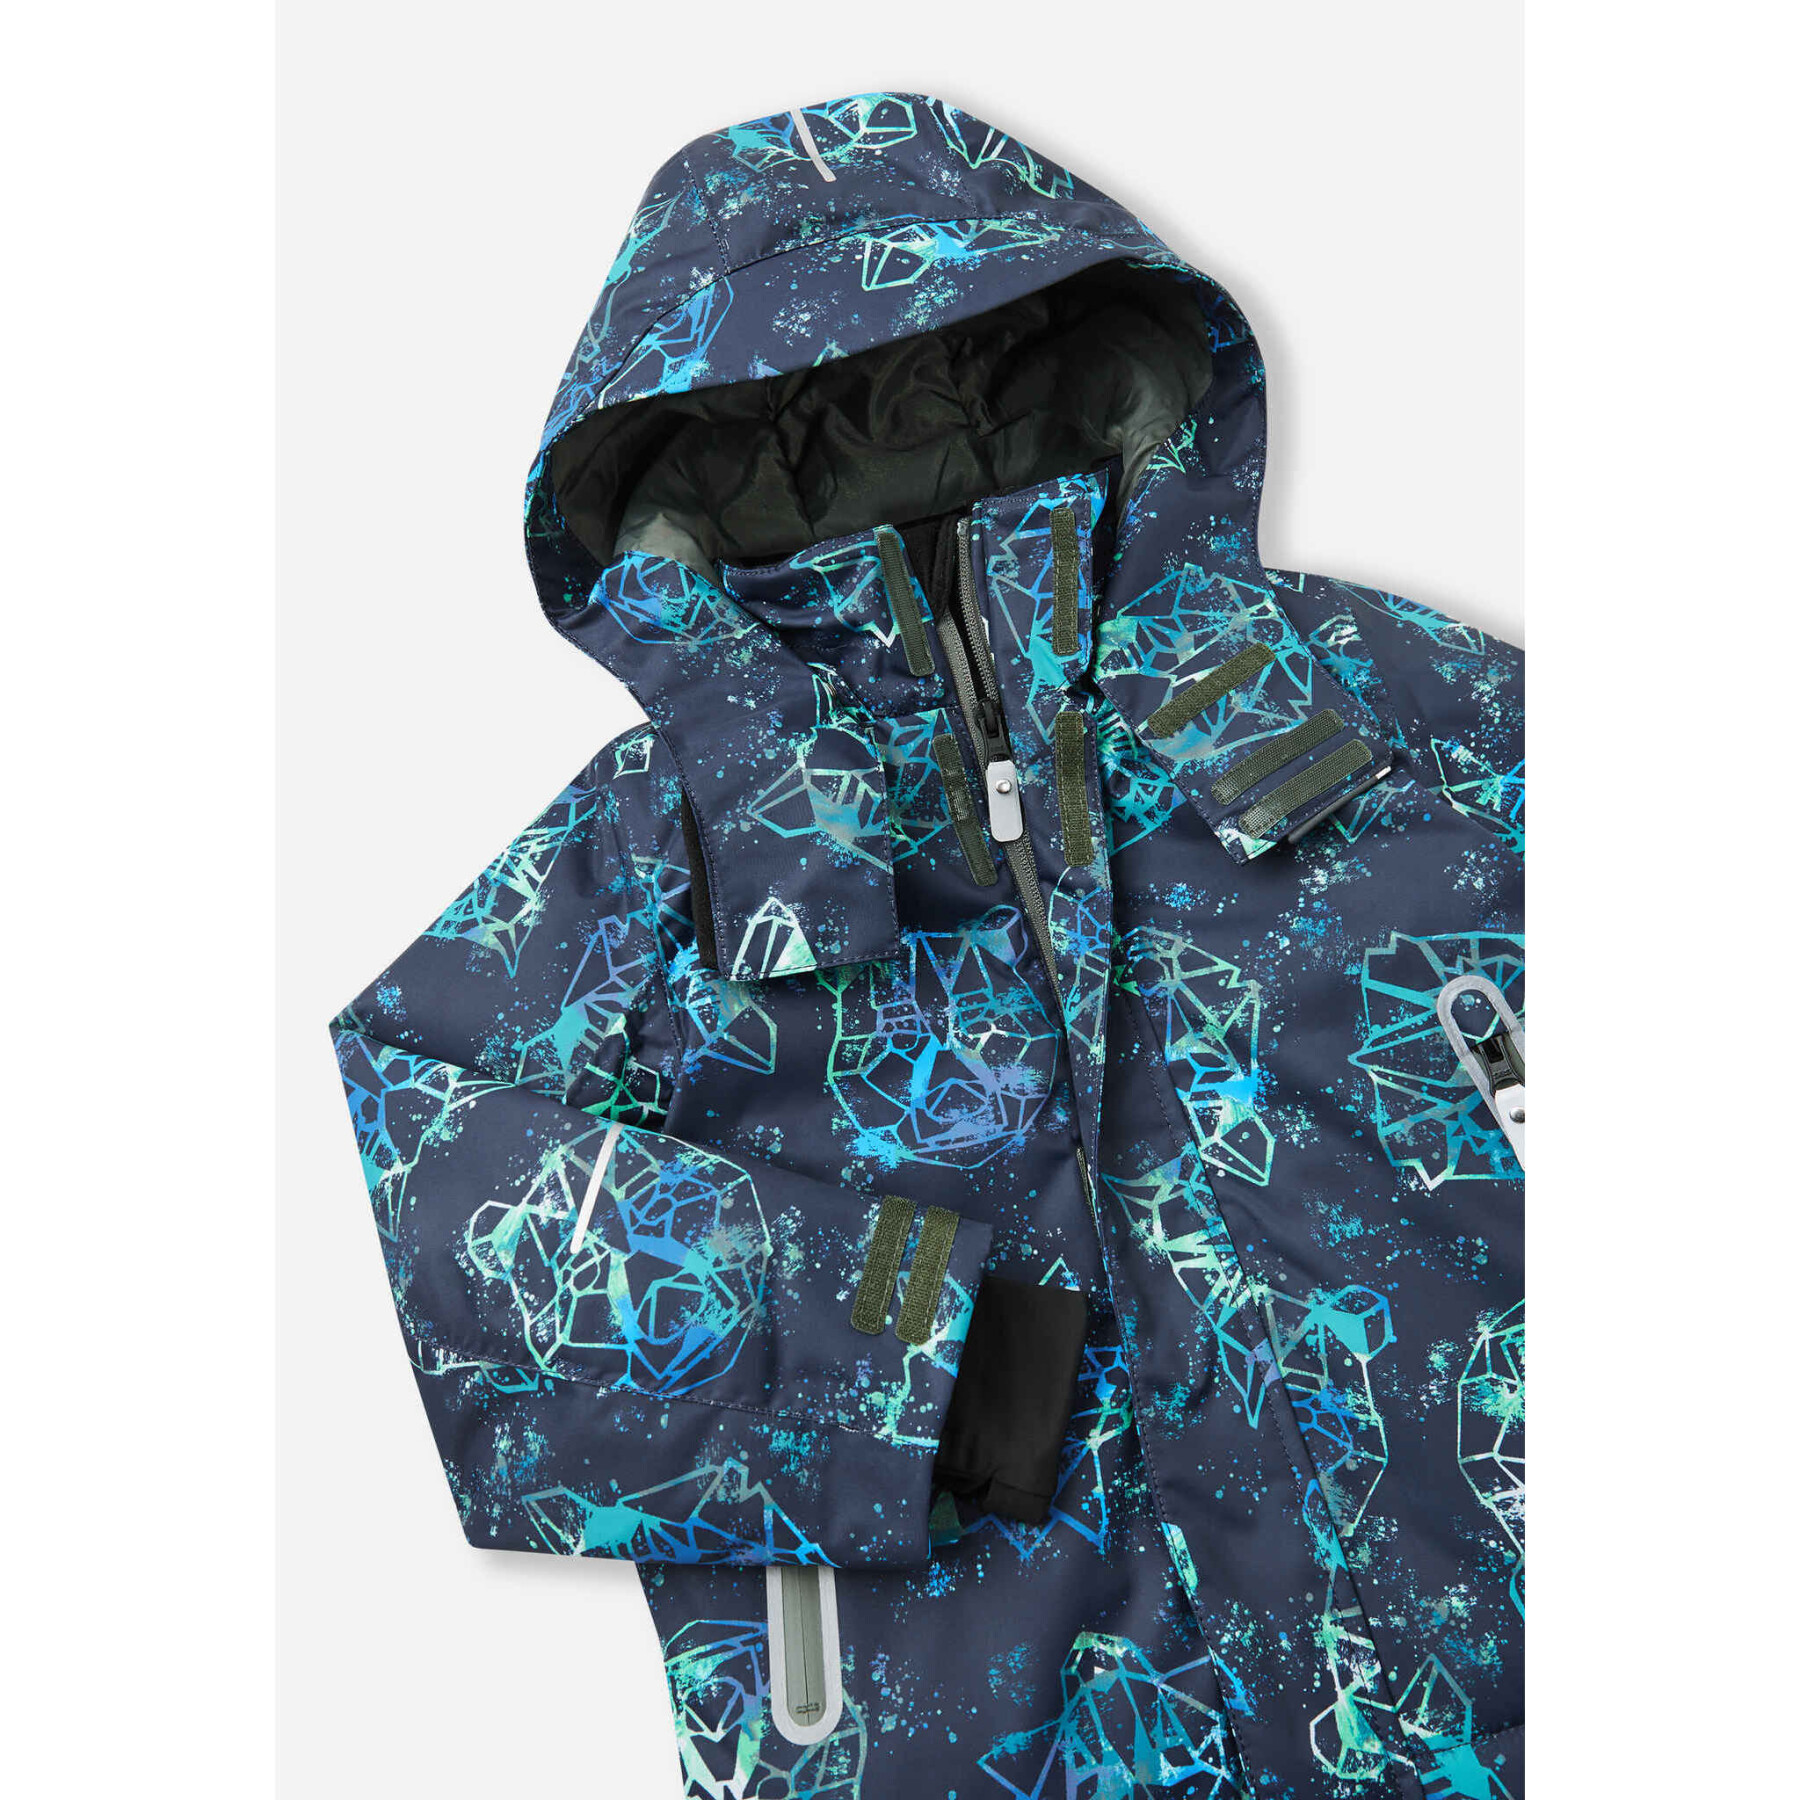 Waterproof jacket for children Reima Kairala